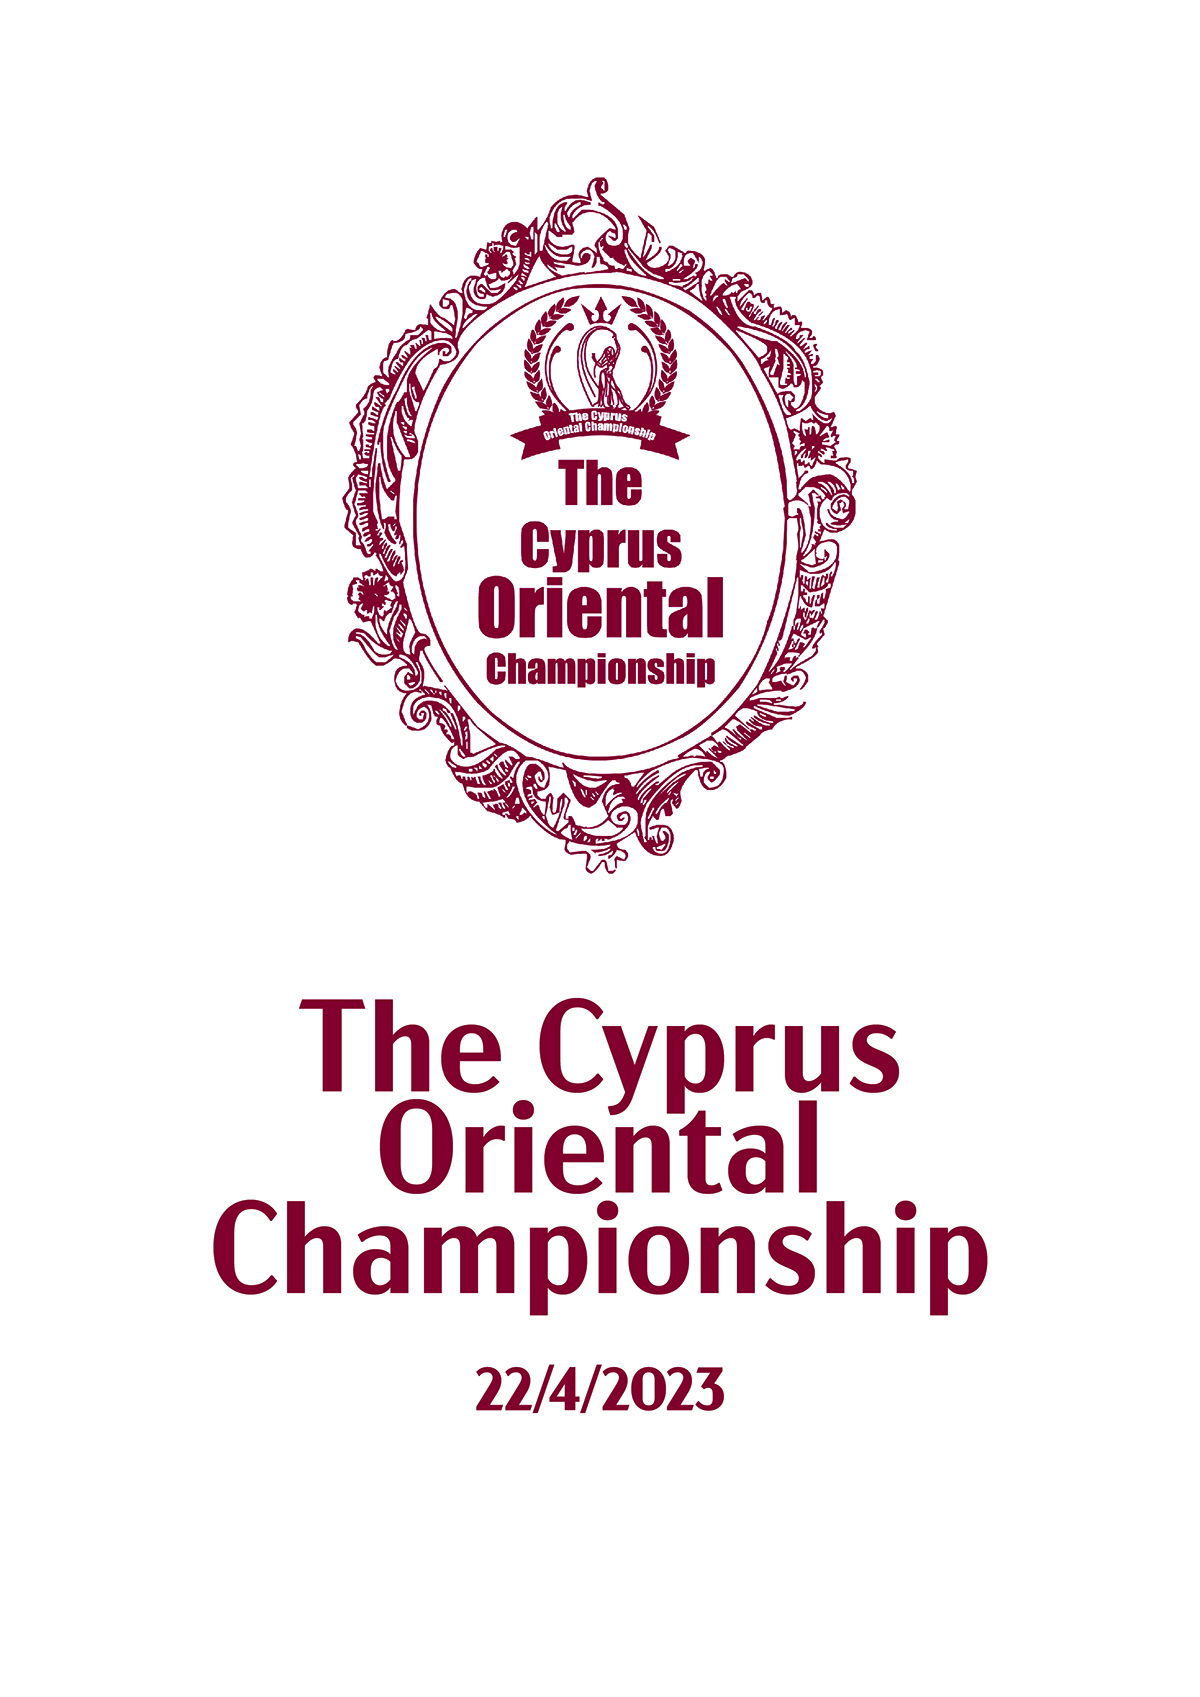 THE CYPRUS ORIENTAL CHAMPIONSHIP